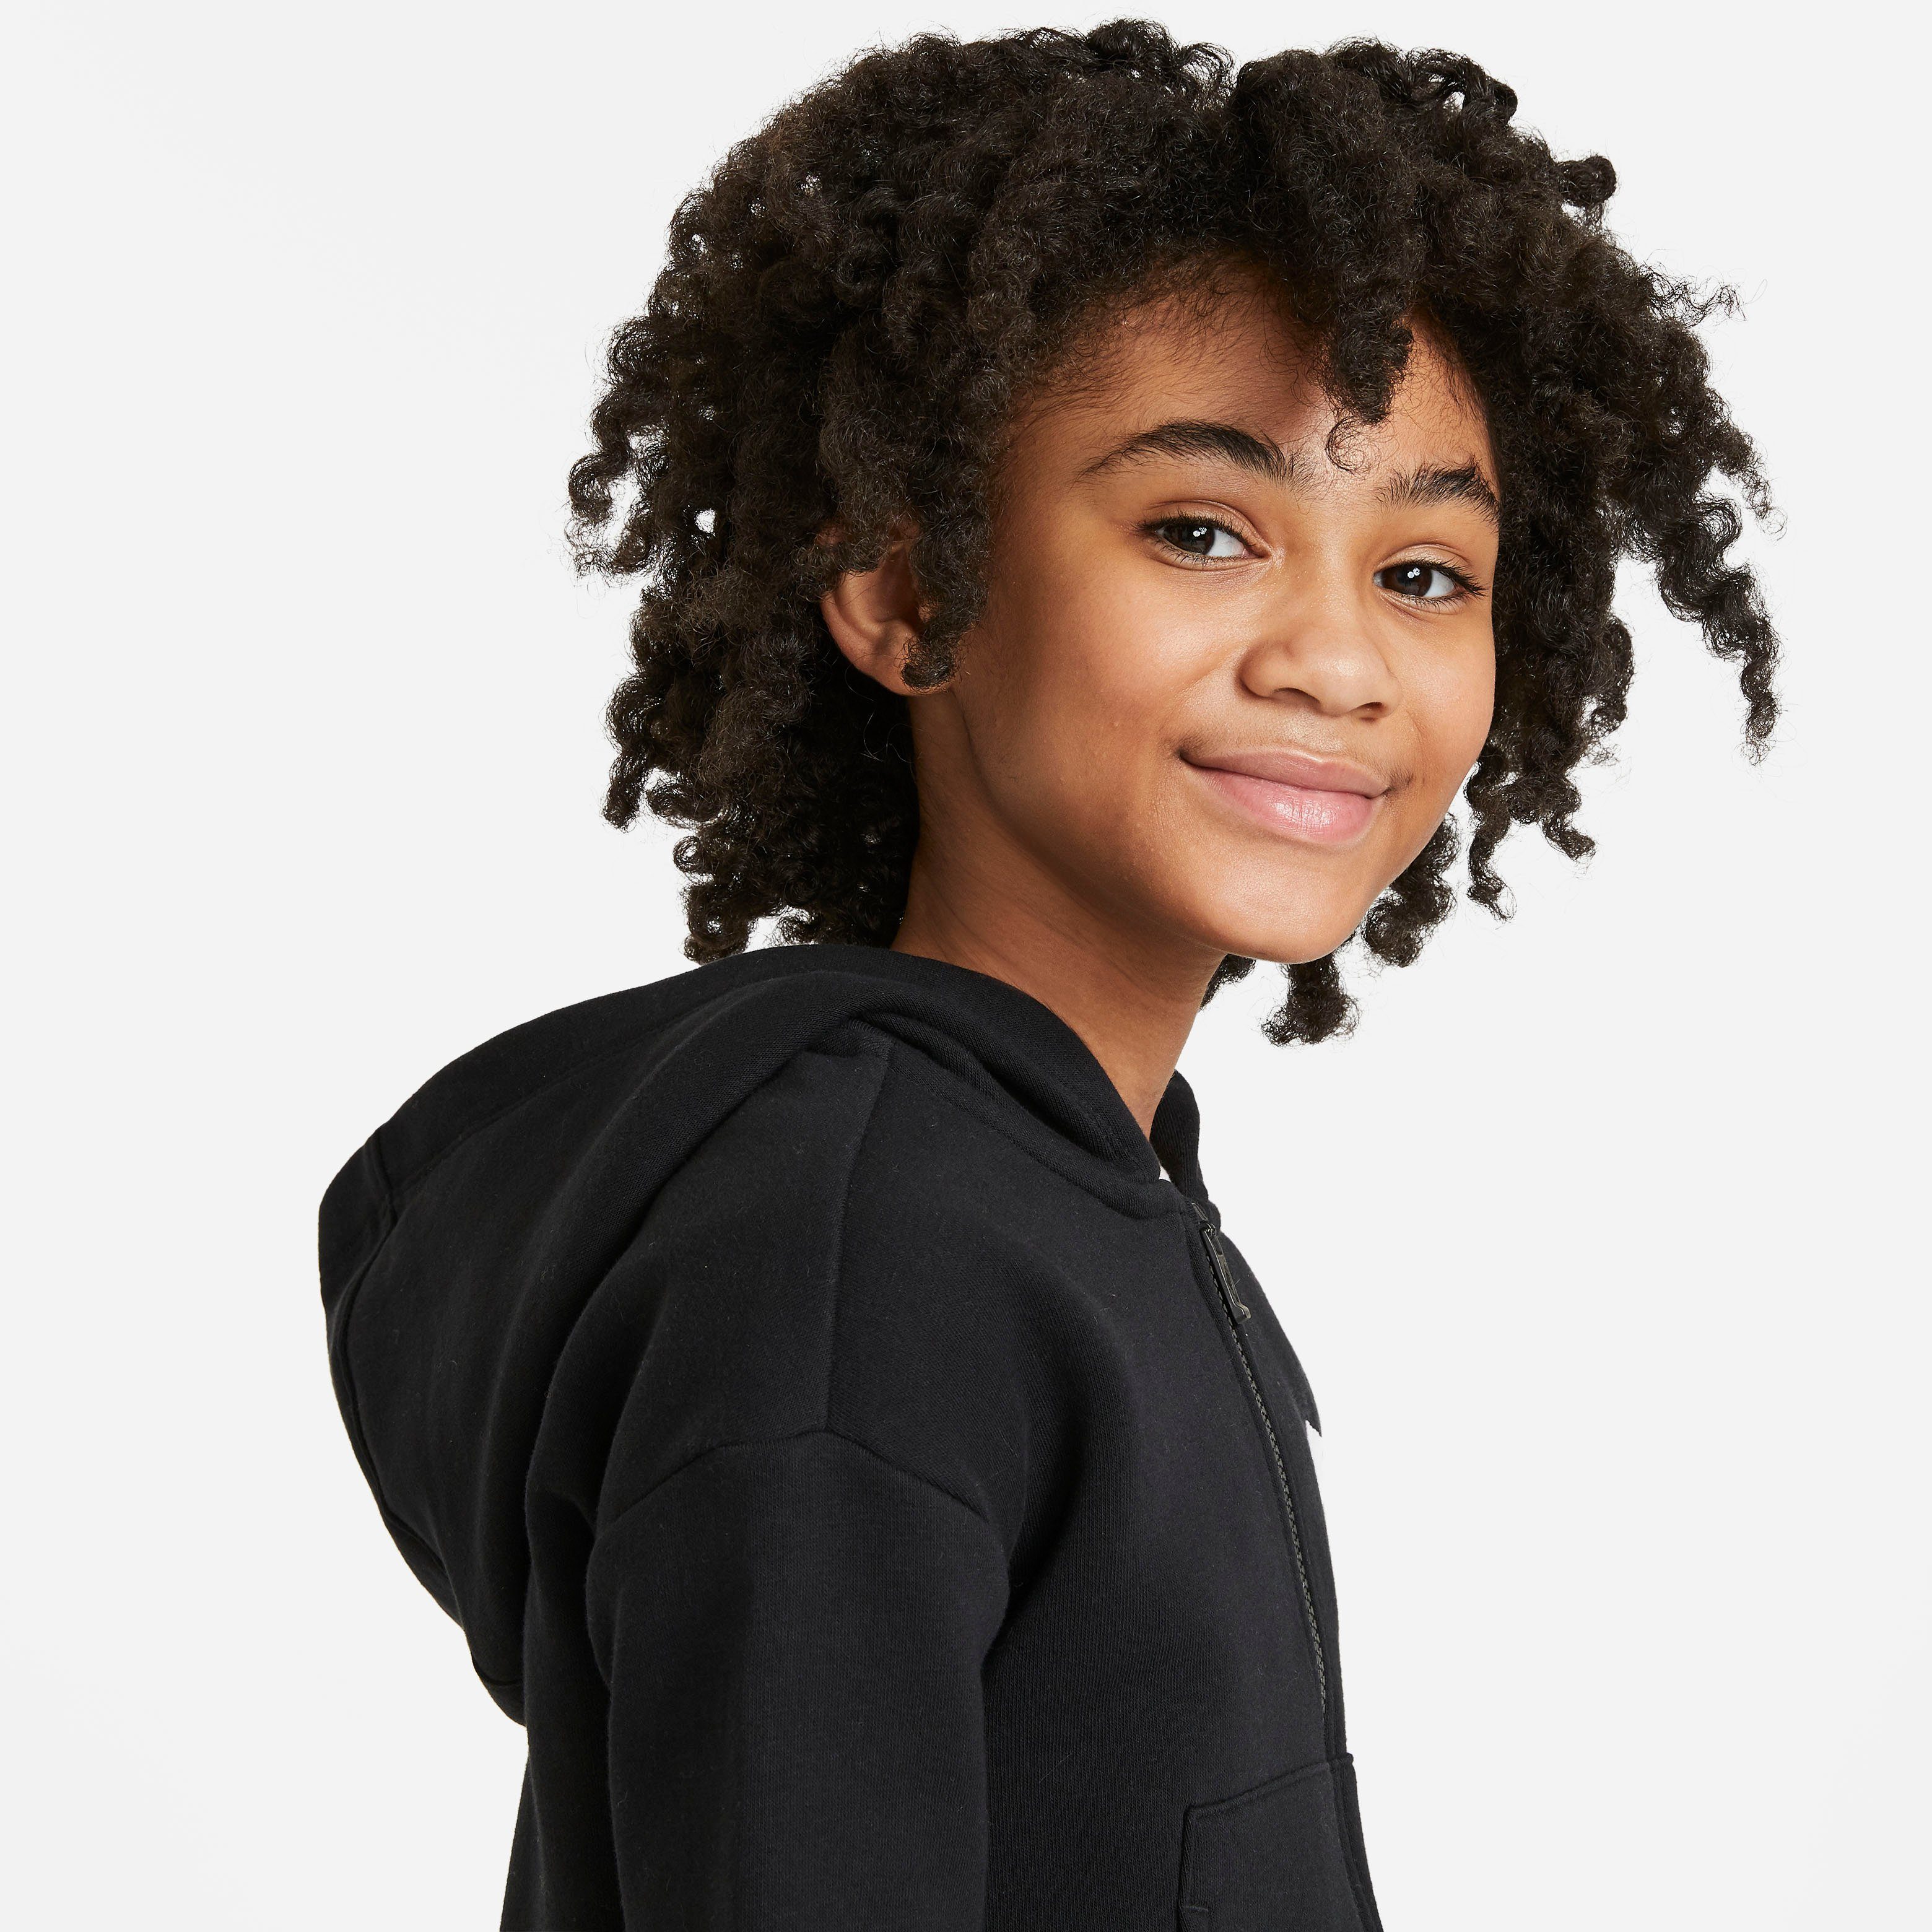 Full-Zip Kids' Club Nike Hoodie schwarz Big Sportswear Fleece (Girls) Kapuzensweatjacke